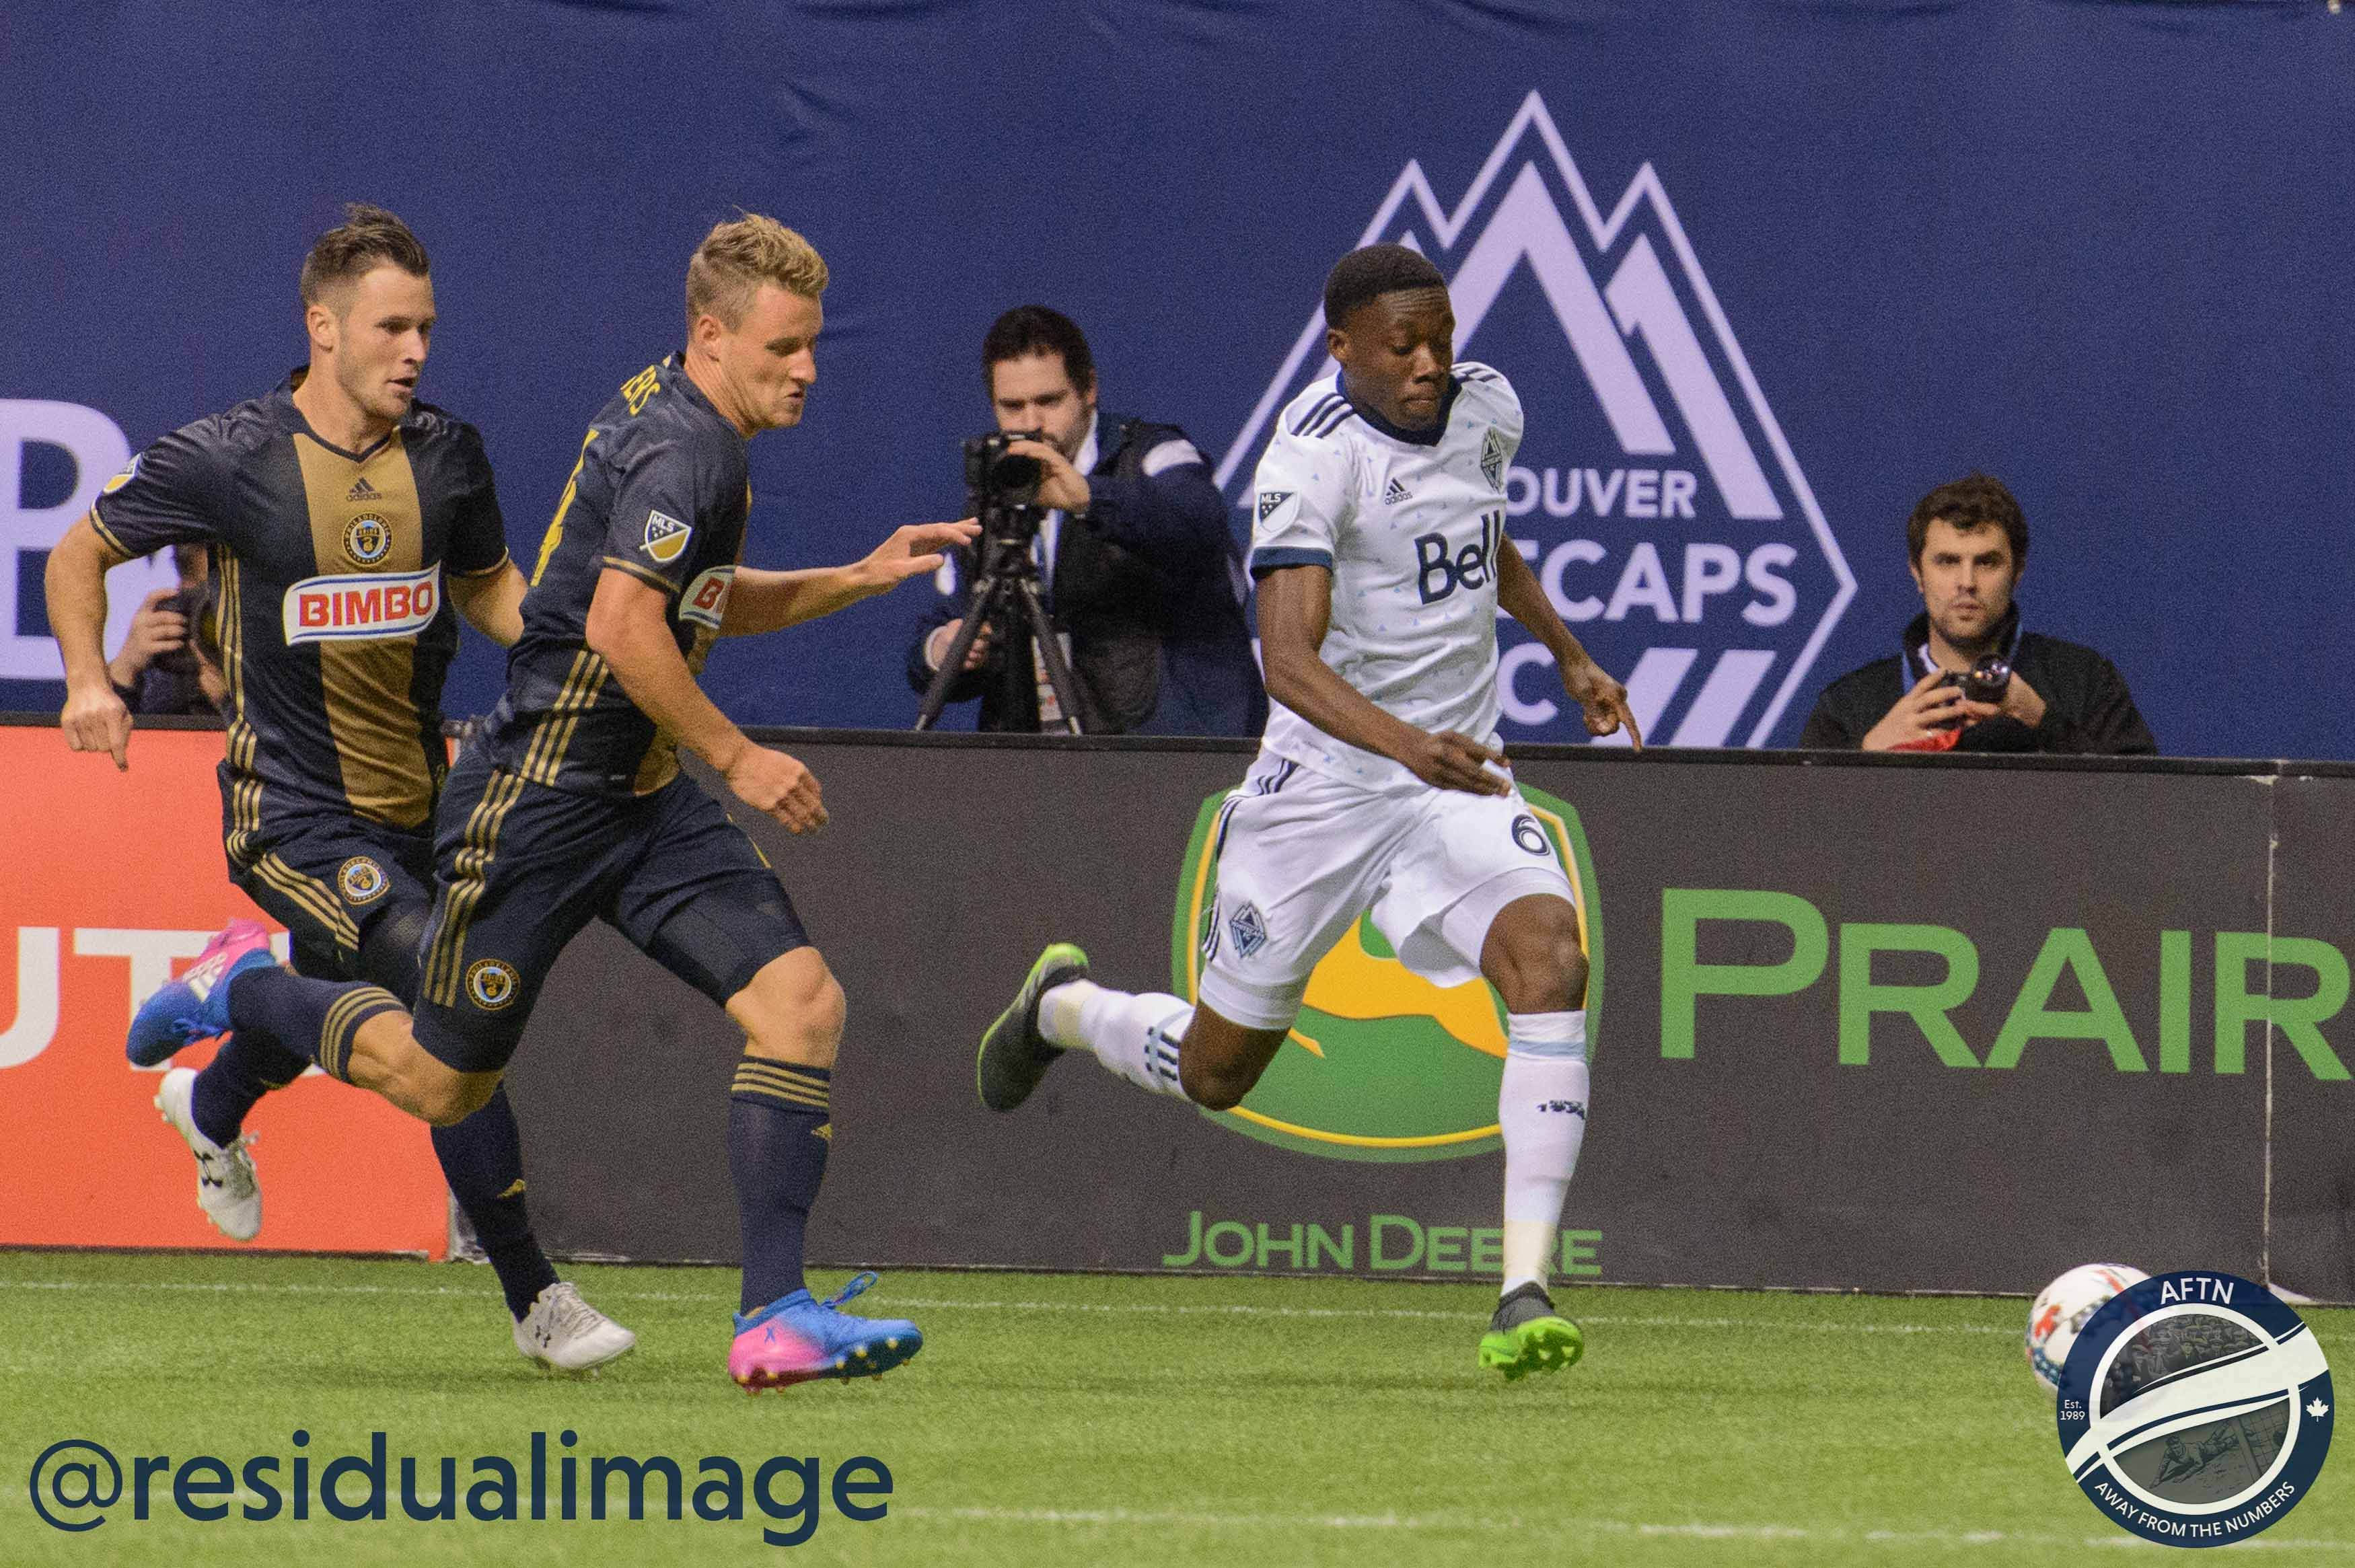 Vancouver Whitecaps v Philadelphia Union - A MLS Season Opener Story In Pictures - AFTN